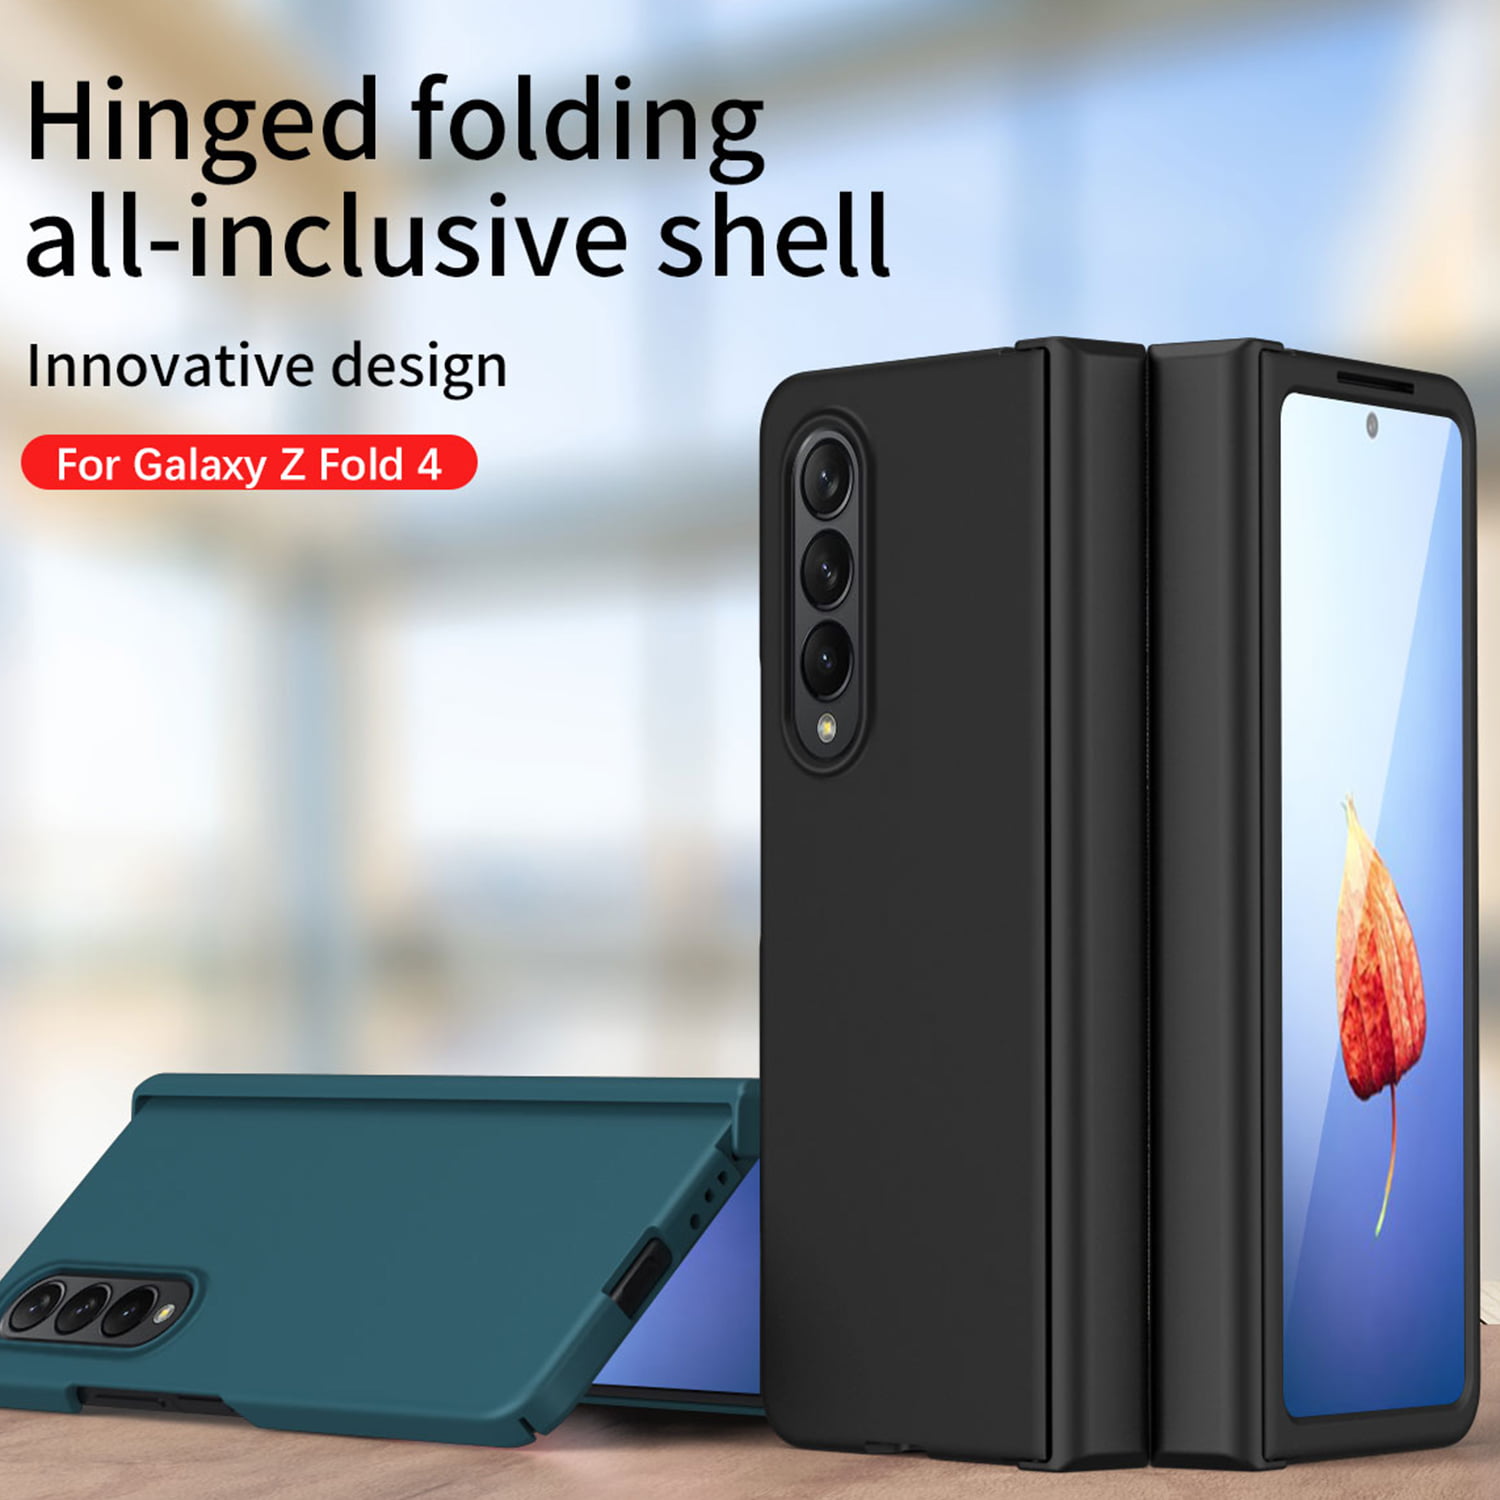 Phone Case For Samsung Galaxy Z Fold 5 Z Fold 4 Z Fold 3 Z Fold 2 Back Cover  Plating Single Sided Anti-Scratch Lines / Waves Marble Tempered Glass 2023  - US $19.99